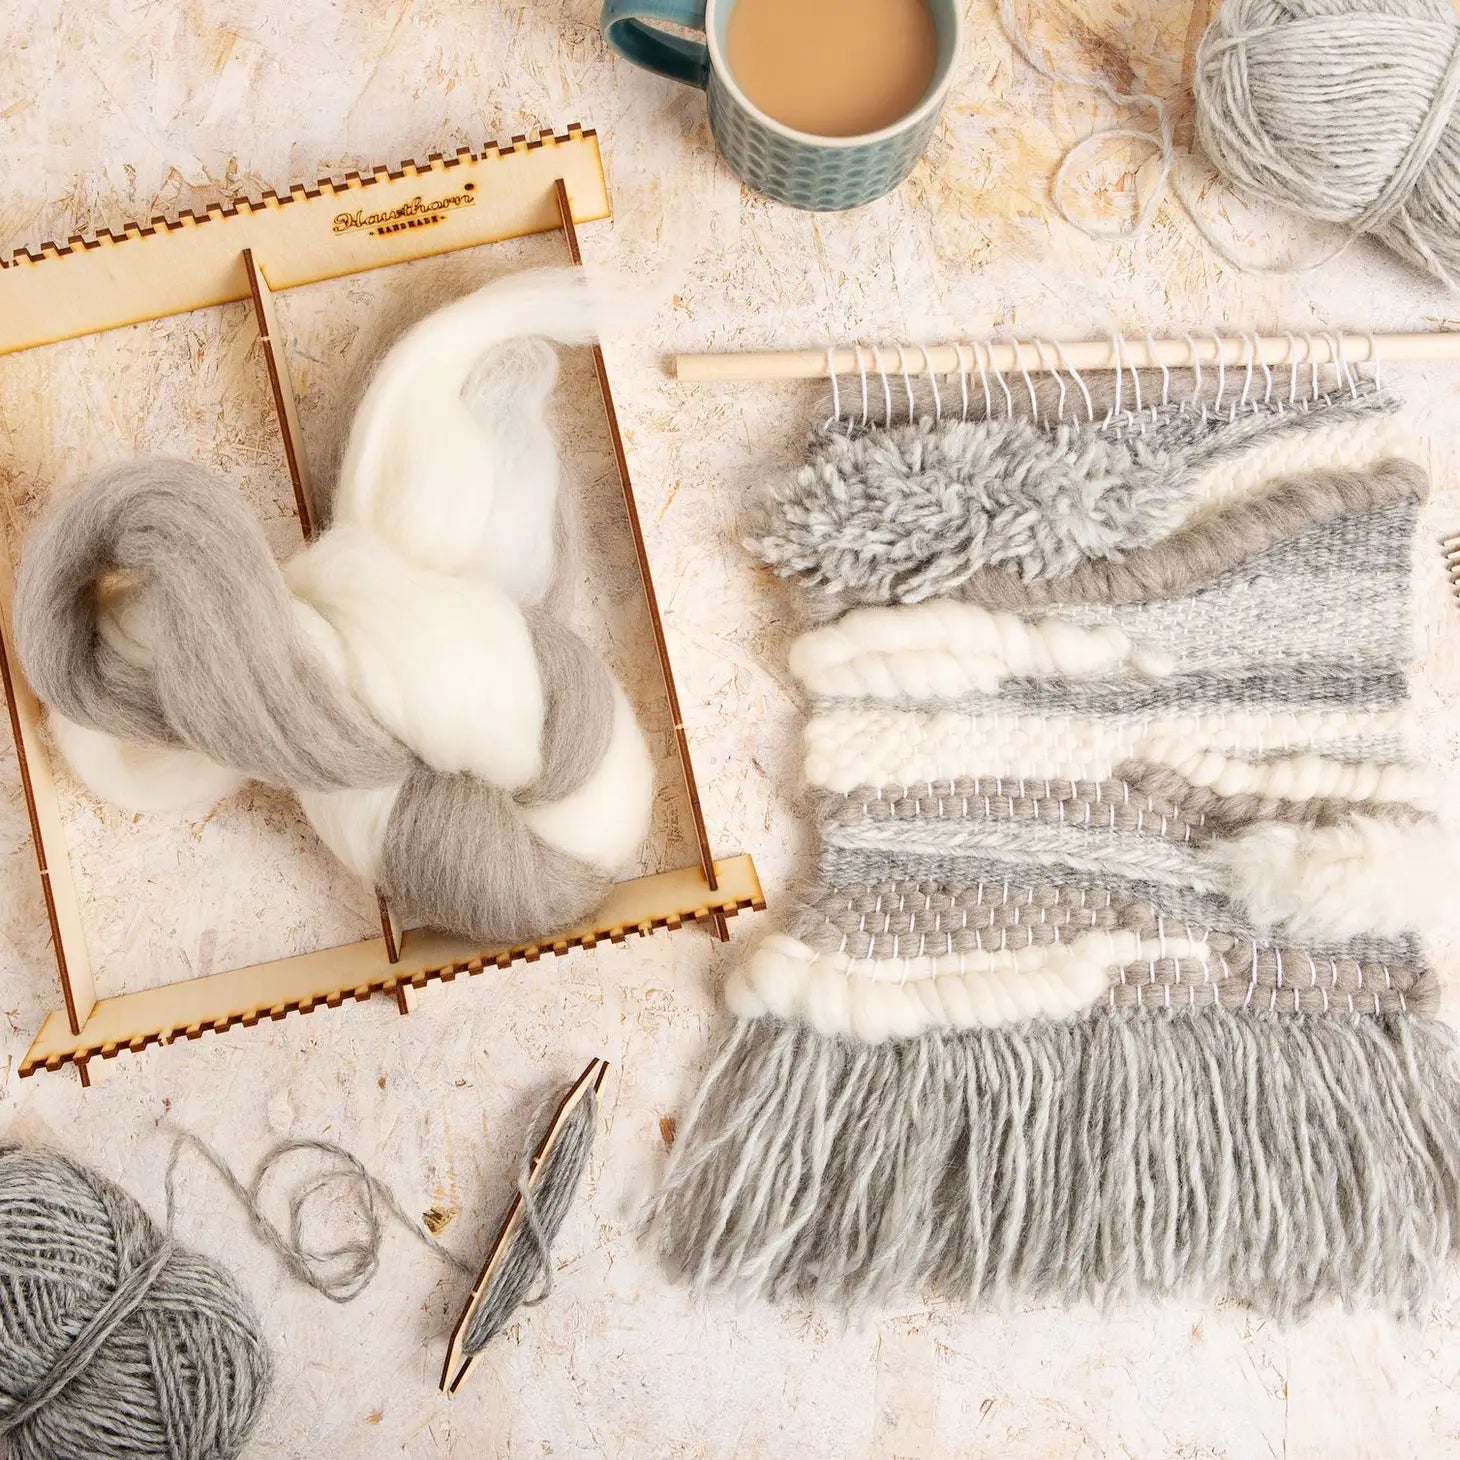 Folklore Weaving Kits - by Hawthorn Handmade